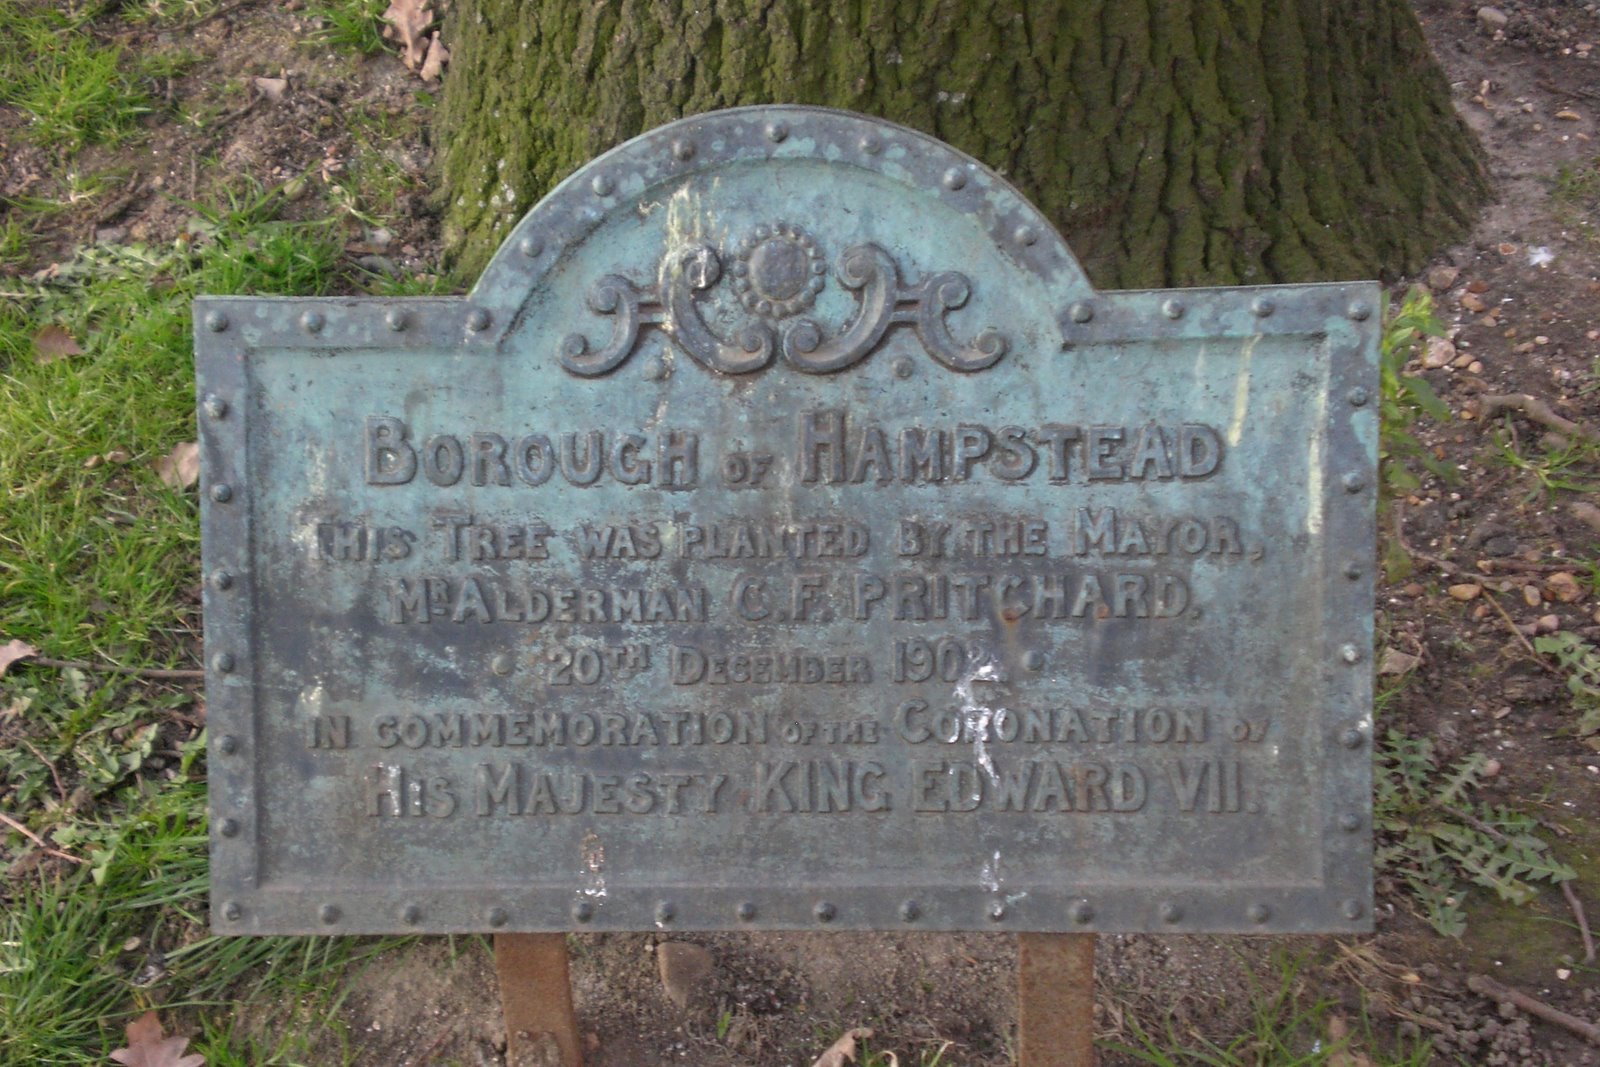 [West+End+tree+plaque.JPG]